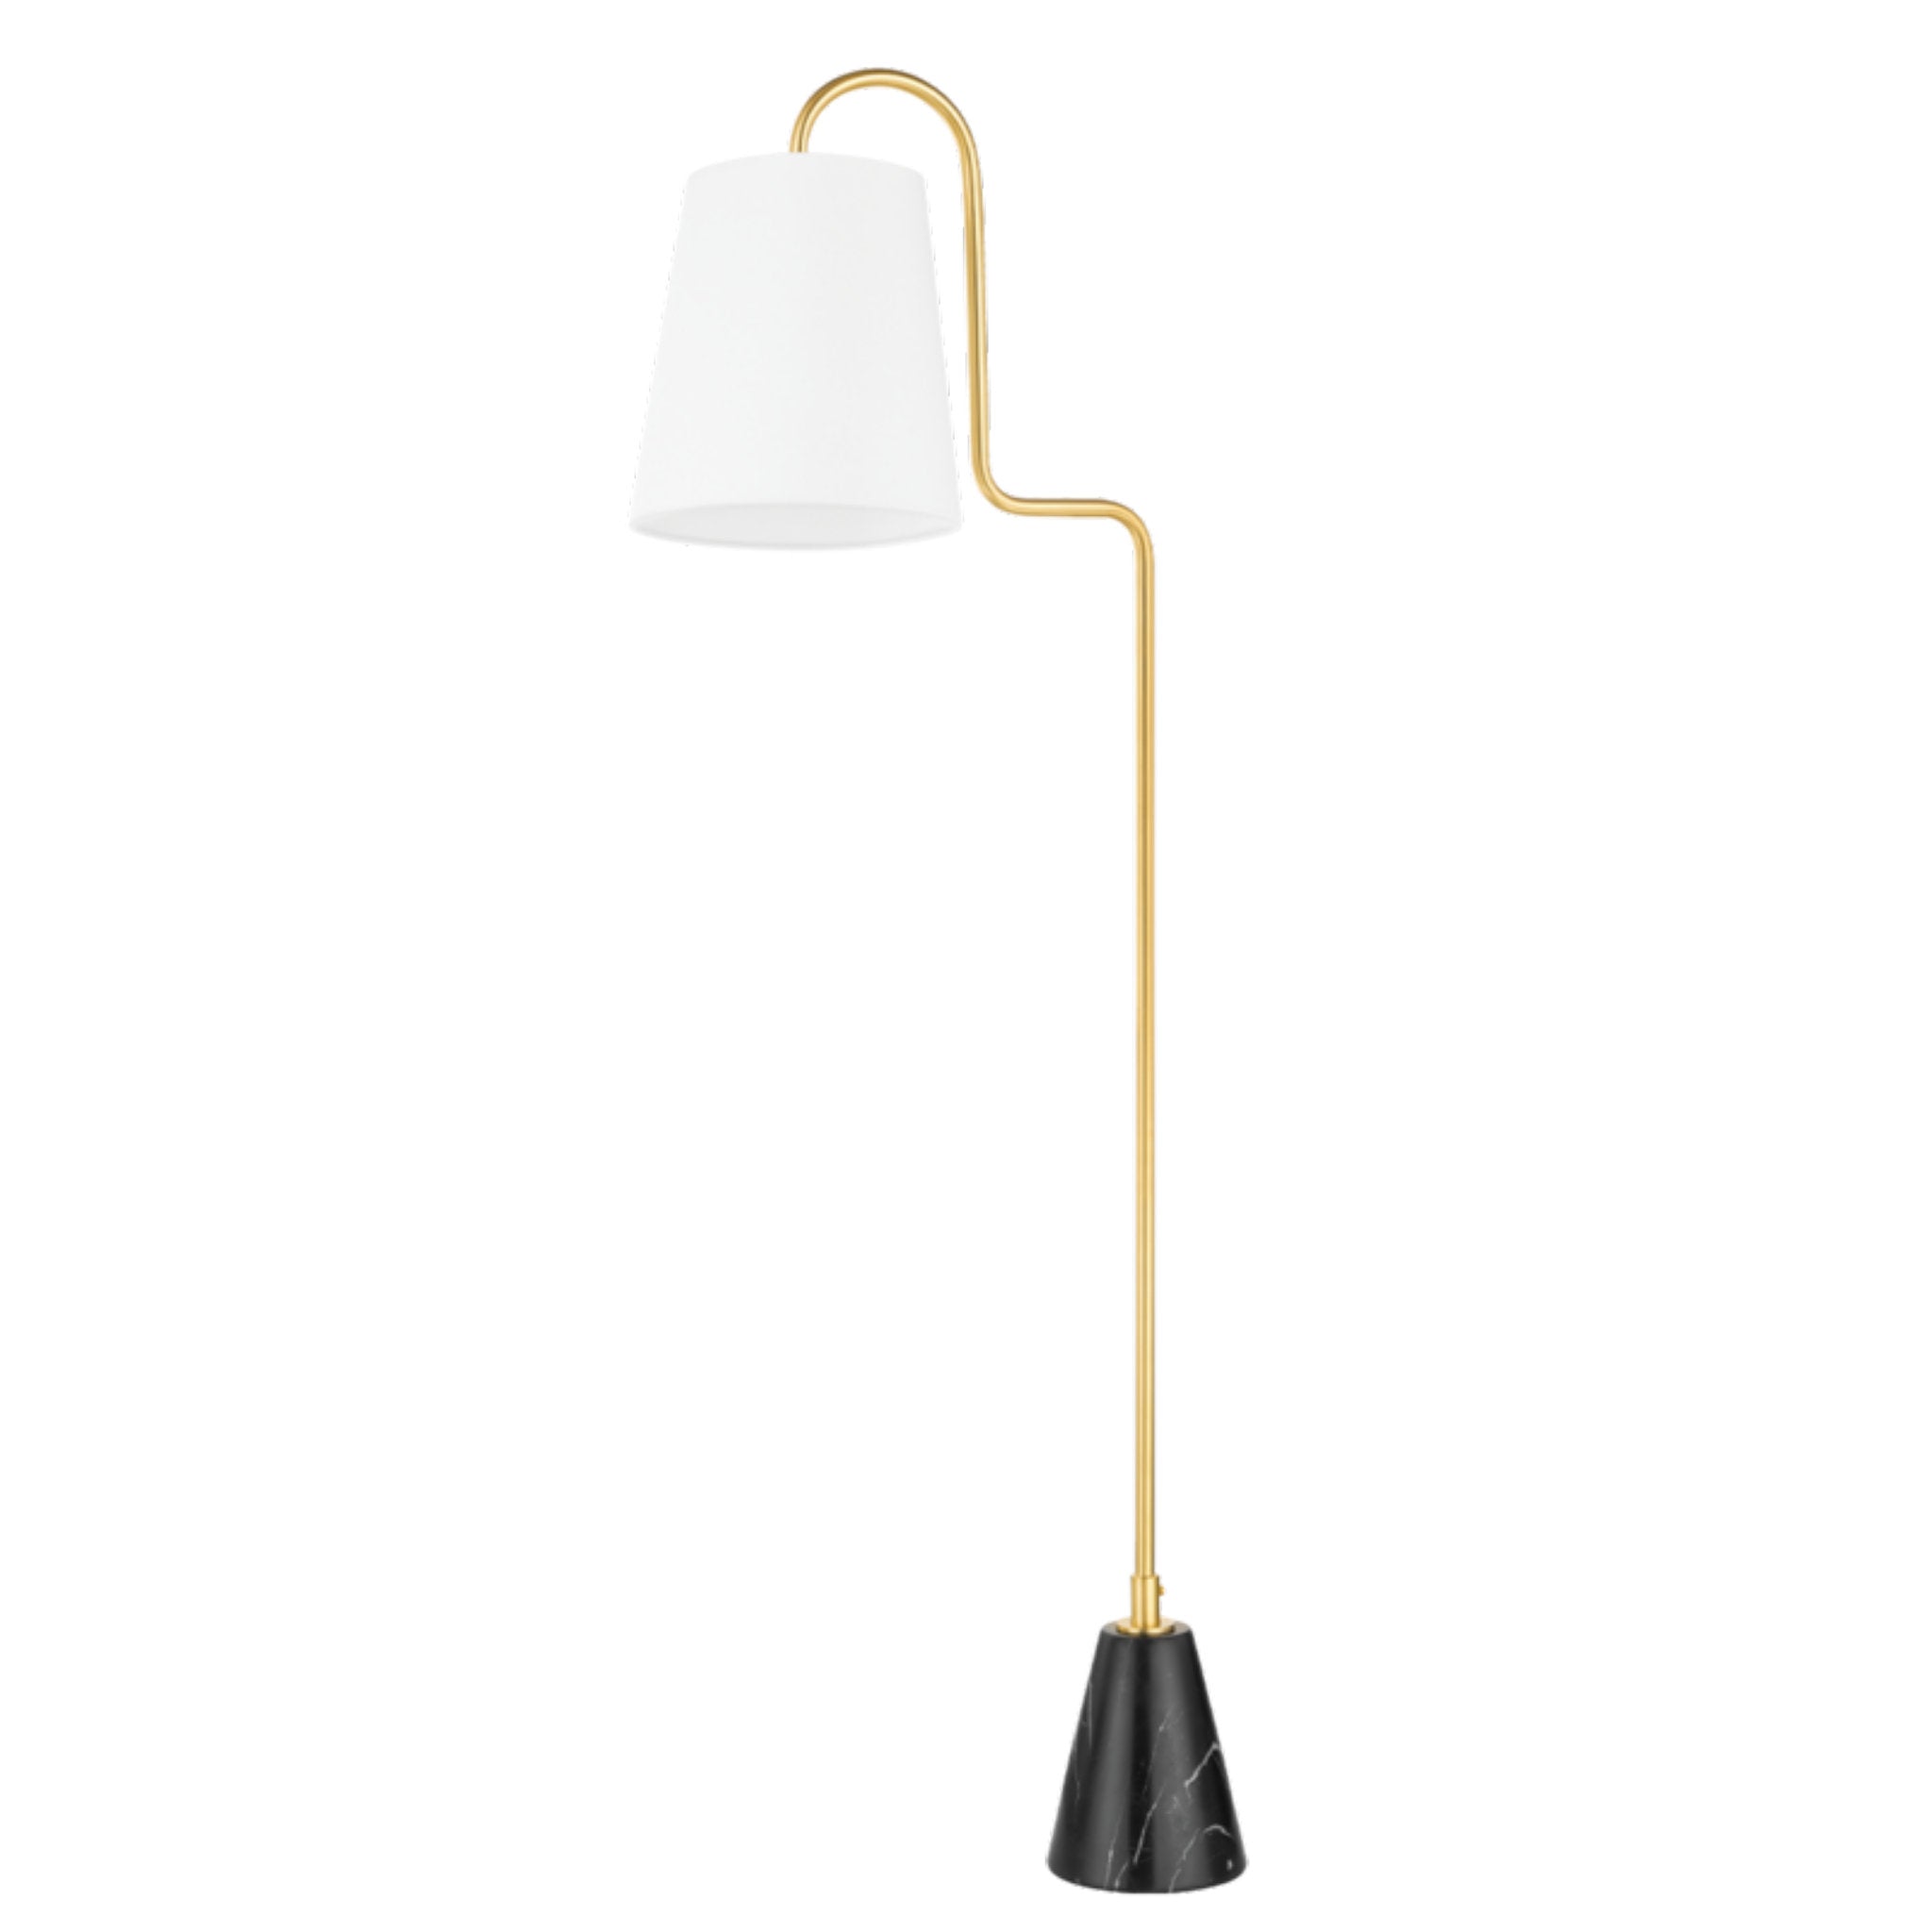 Jaimee 1 Light Floor Lamp in Aged Brass